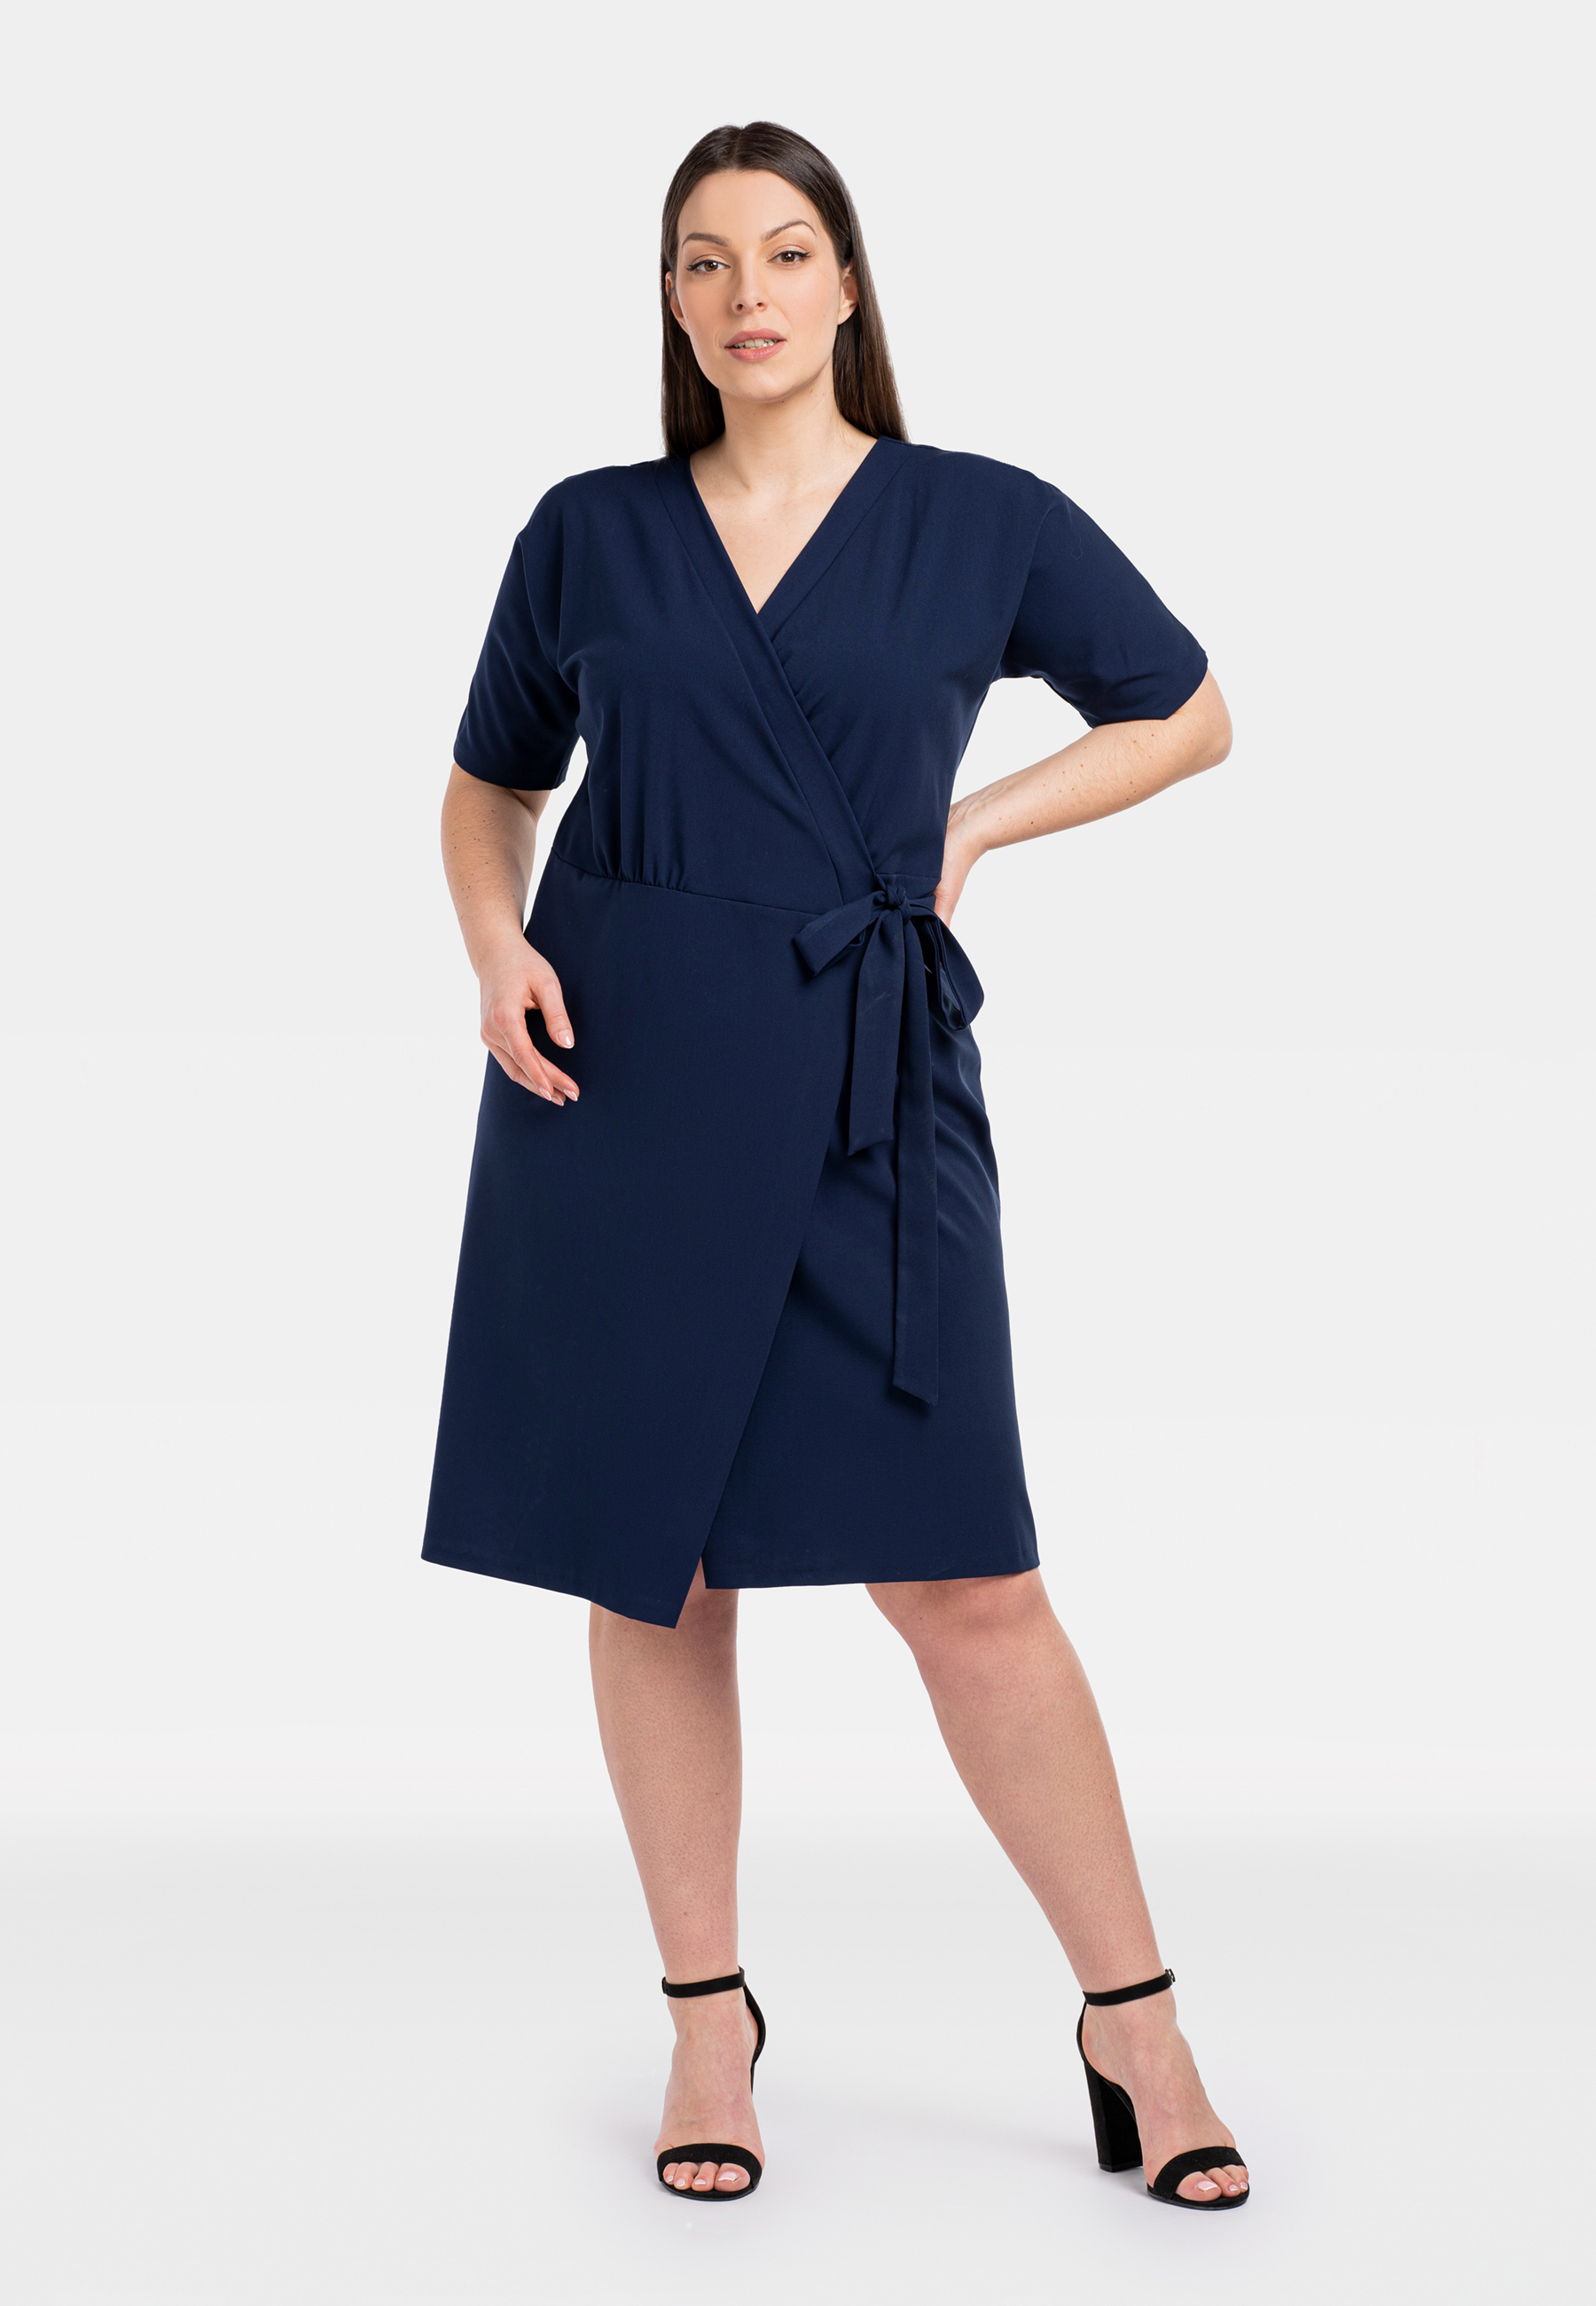 Karko Woman's Dress SC237 Navy Blue